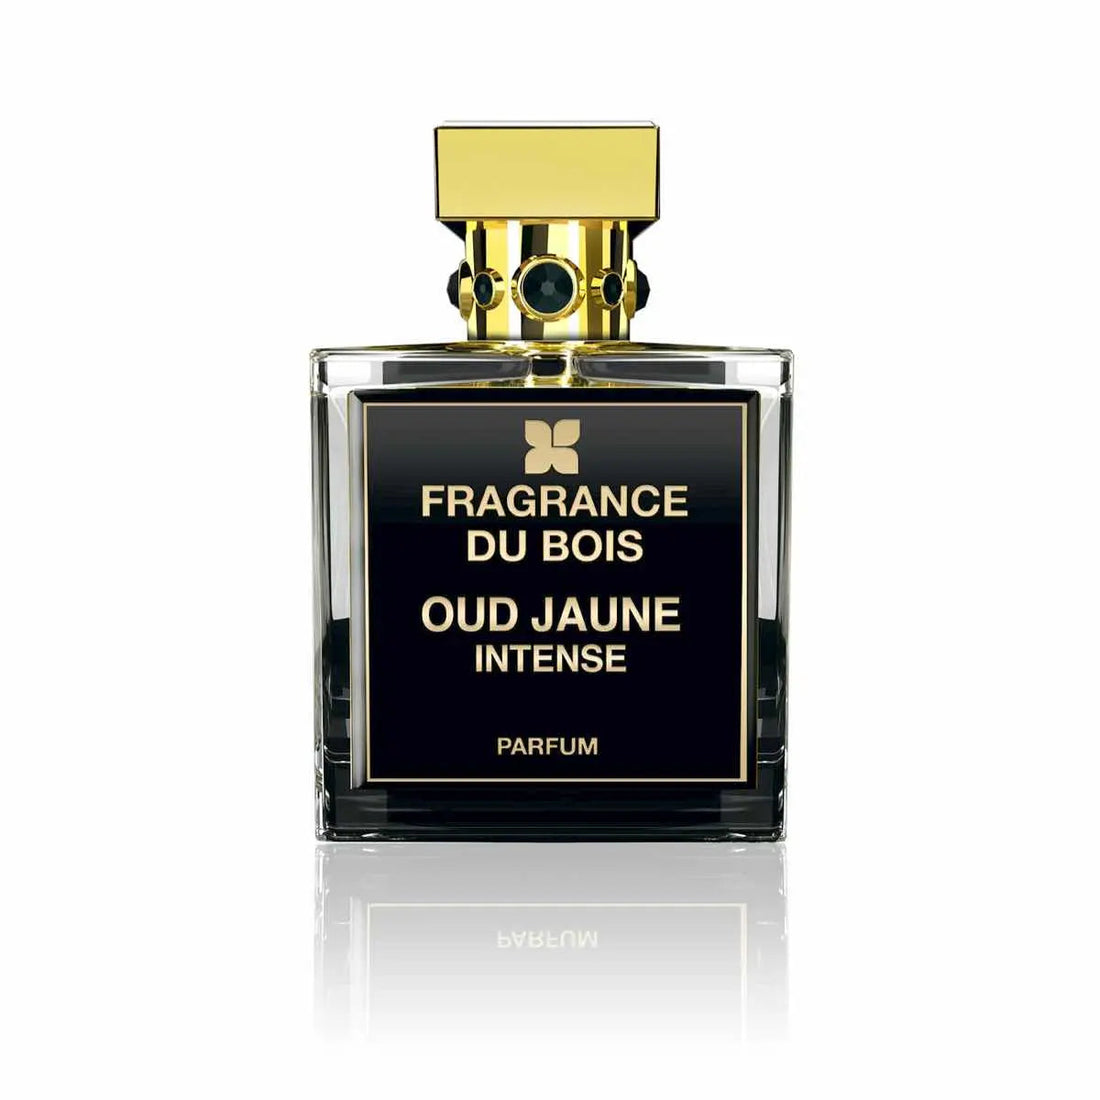 Fragrance du bois Oud Jaune parfum - 100 ml